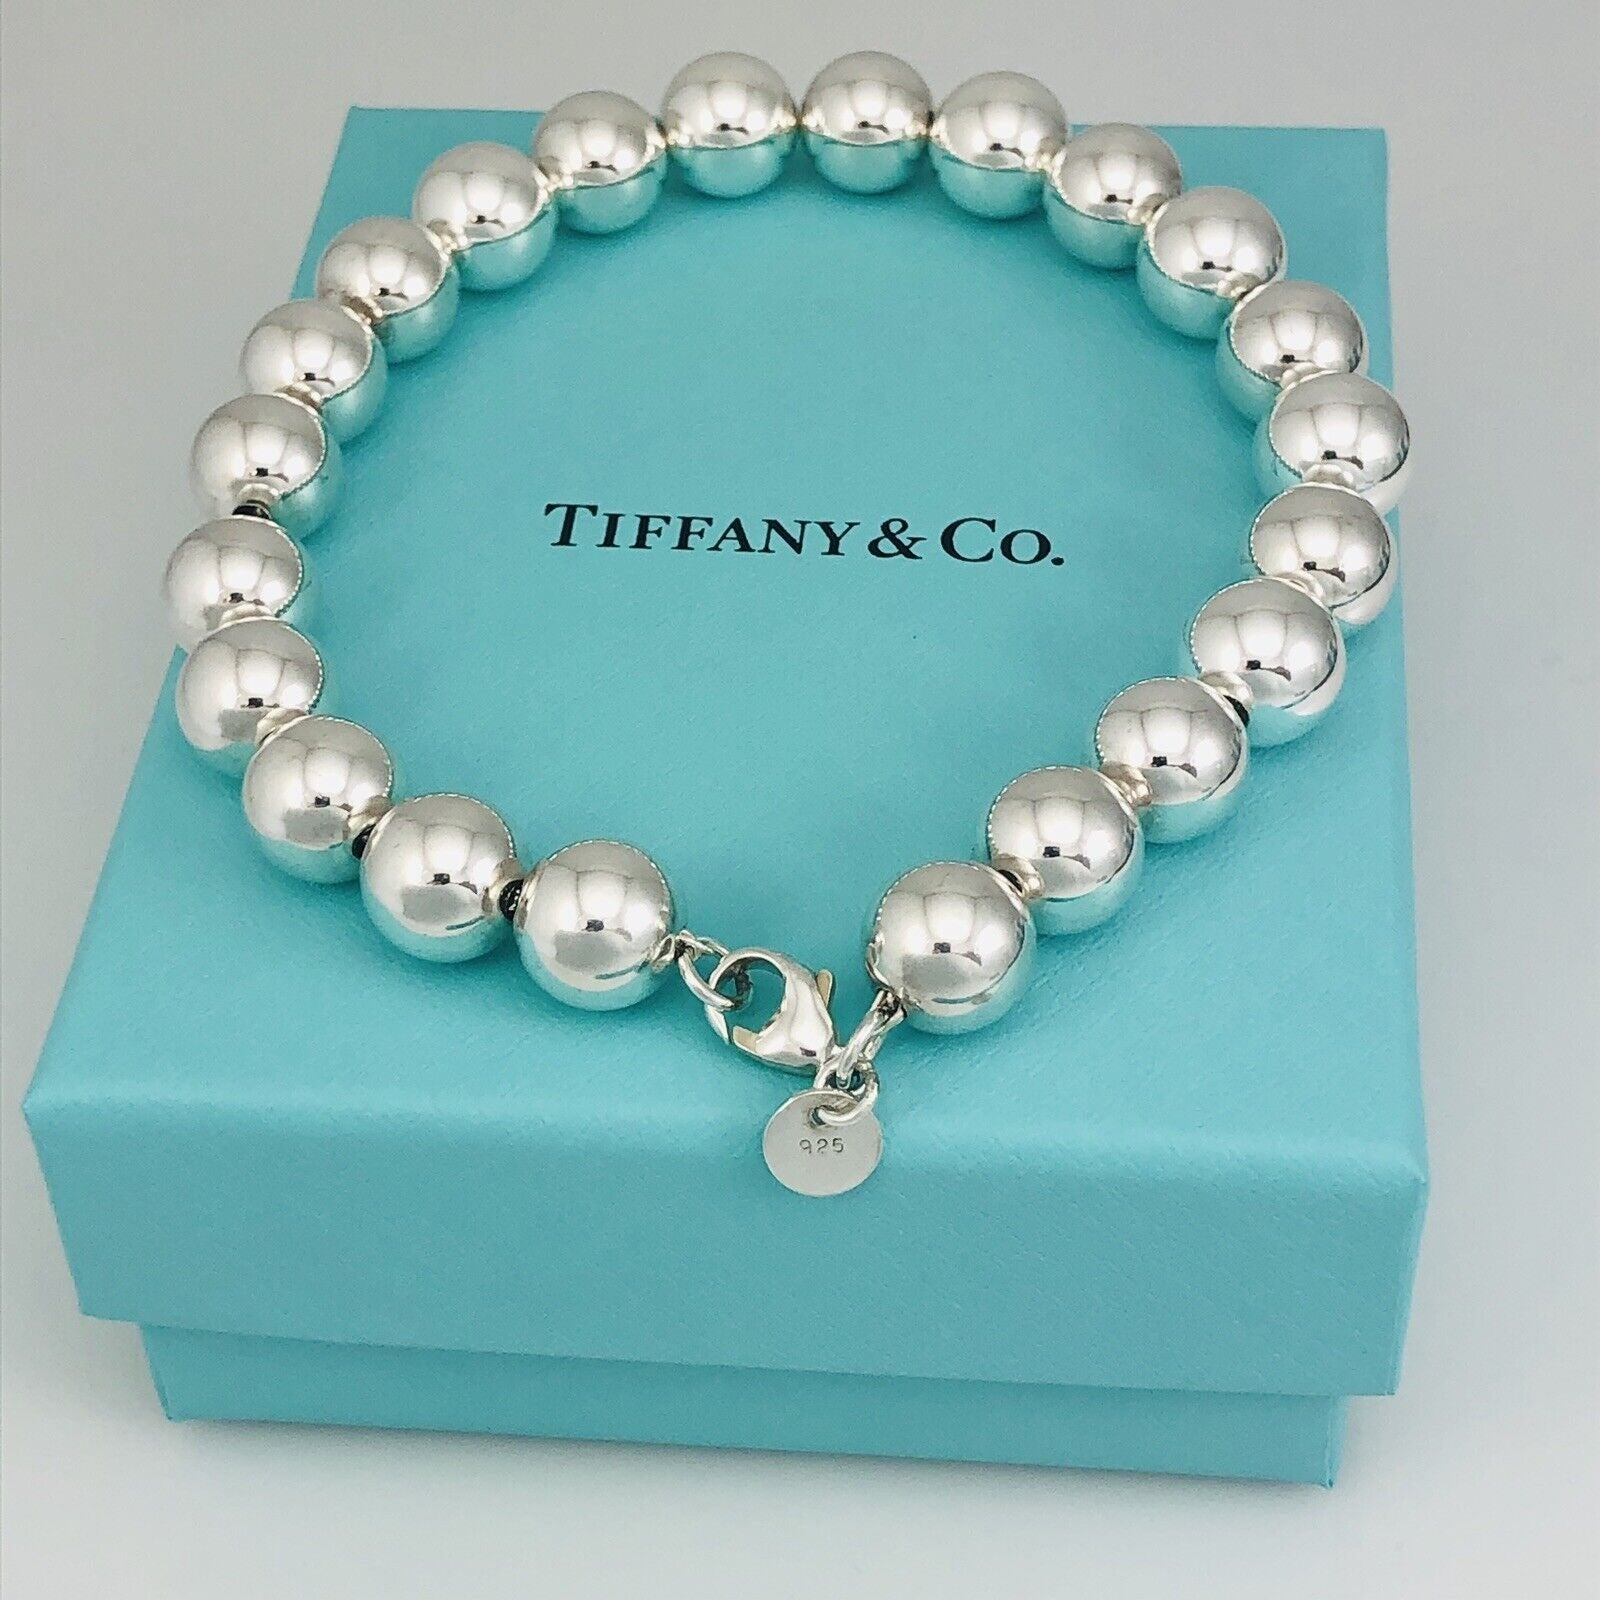 TIFFANY & CO. Genuine City Hardwear 10mm Ball Bead Silver Bracelet Size 7